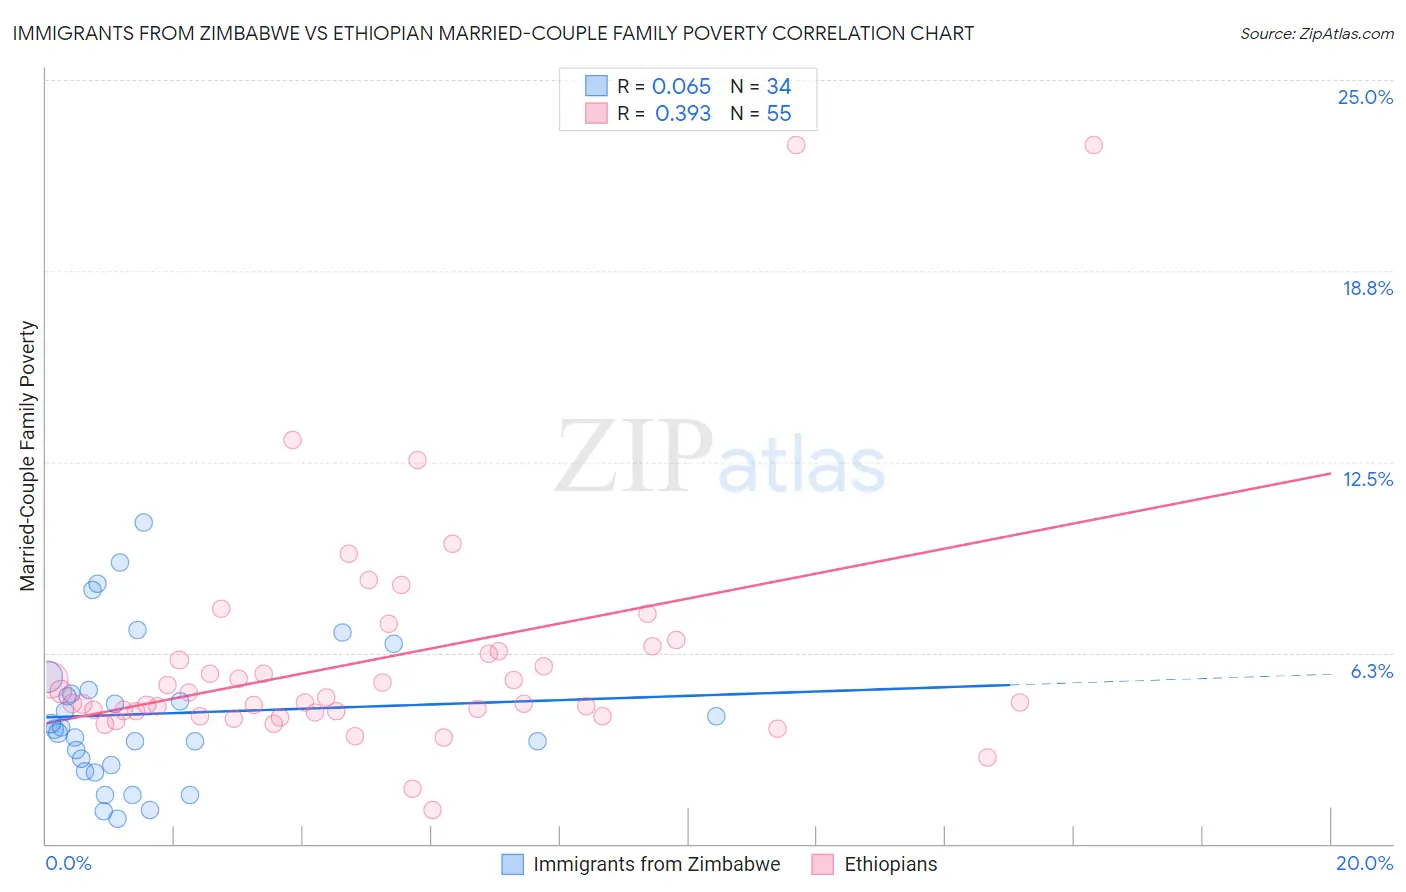 Immigrants from Zimbabwe vs Ethiopian Married-Couple Family Poverty